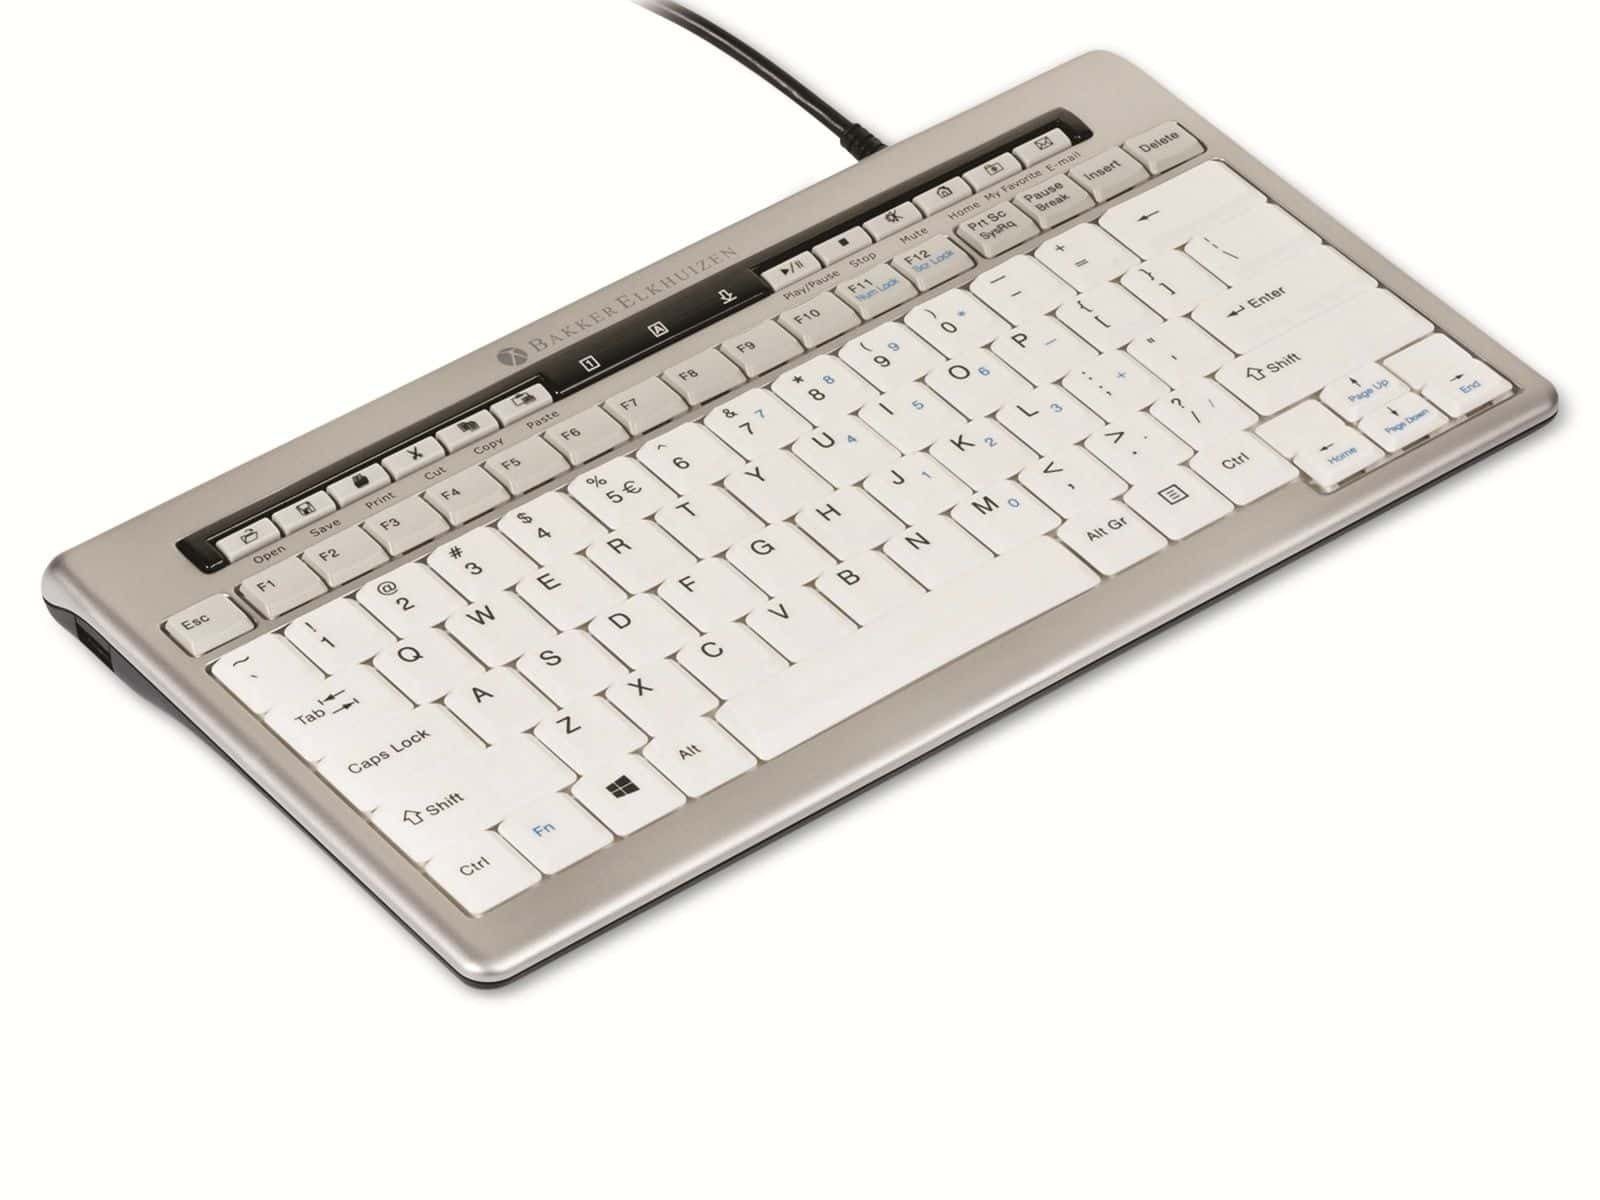 BAKKERELKHUIZEN BAKKERELKHUIZEN USB-Tastatur S-board, 840 Design Tastatur